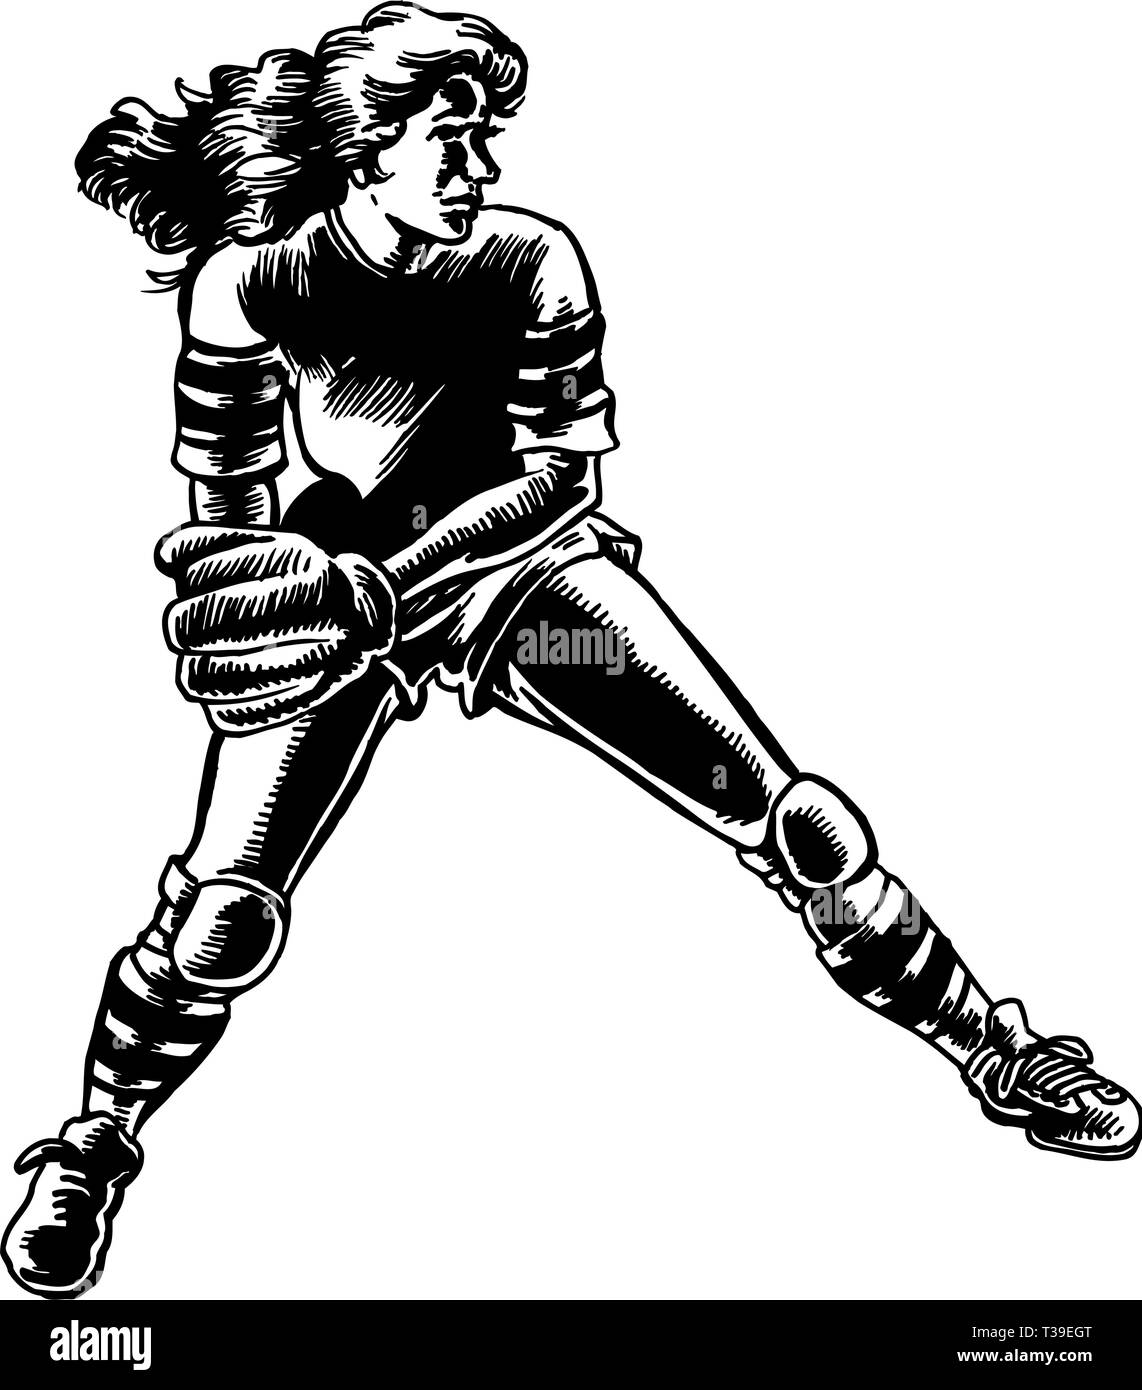 softball player black and white